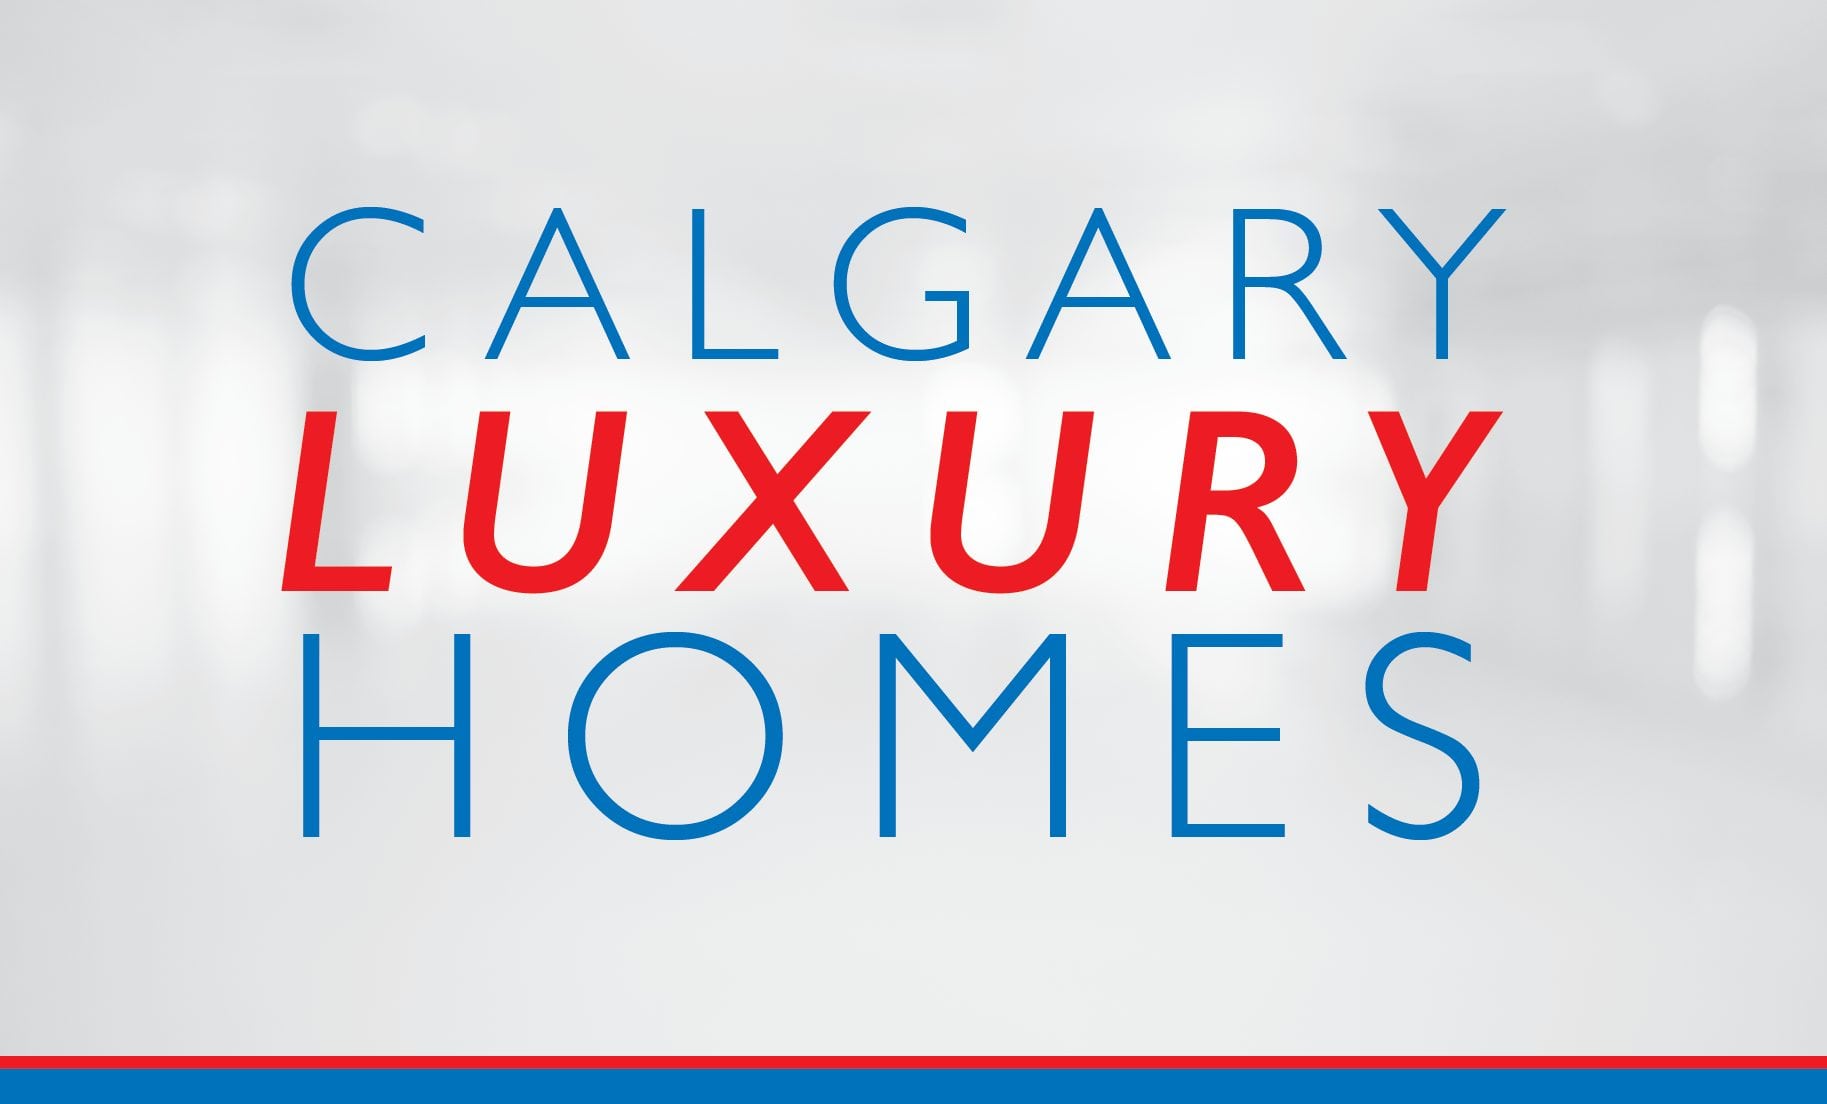 Luxury Homes in Calgary Buyers Guide Luxury Real Estate Agent Calgary